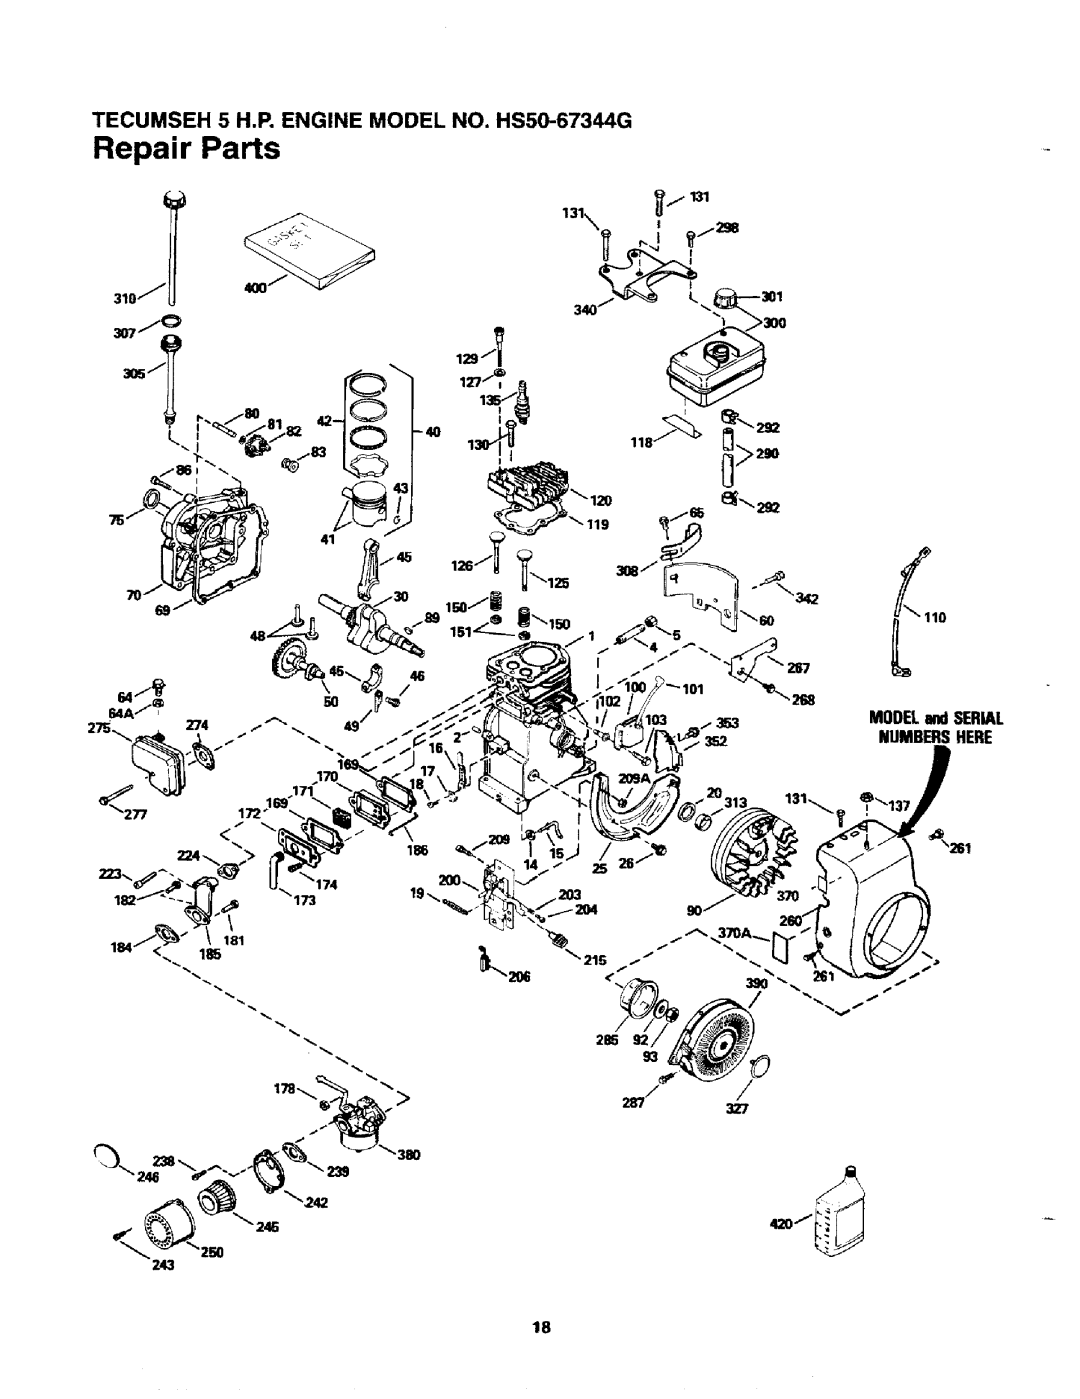 Craftsman 247.795940 manual TECUMSEH 5 H.P. ENGINE MODEL NO. HS50-67344G, MODELandSERIAL NUMBERSHERE, _261 